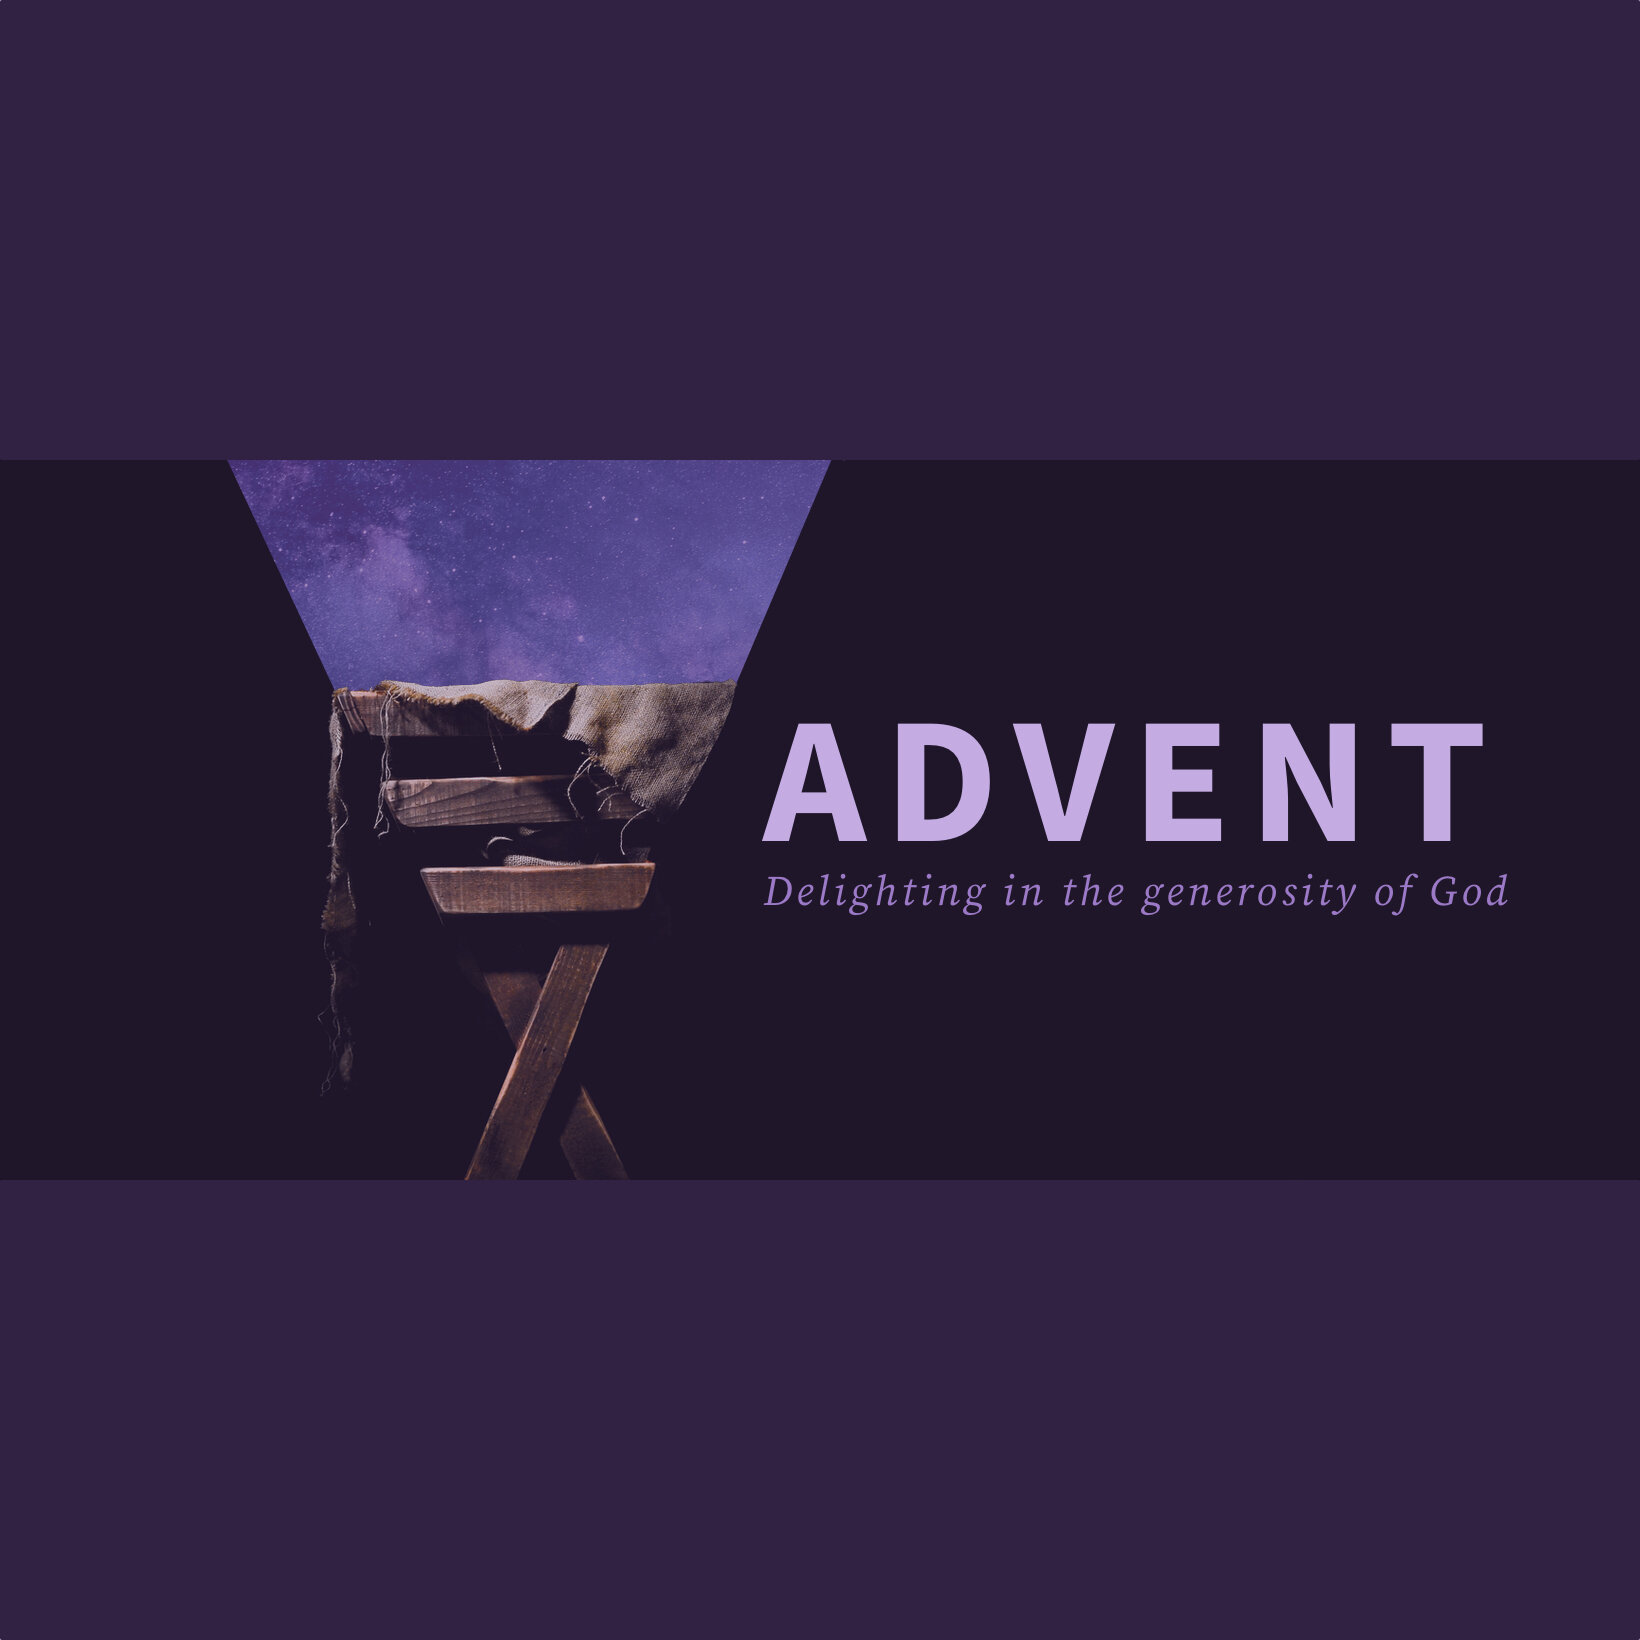 Advent 2019: Delighting in the generosity of God